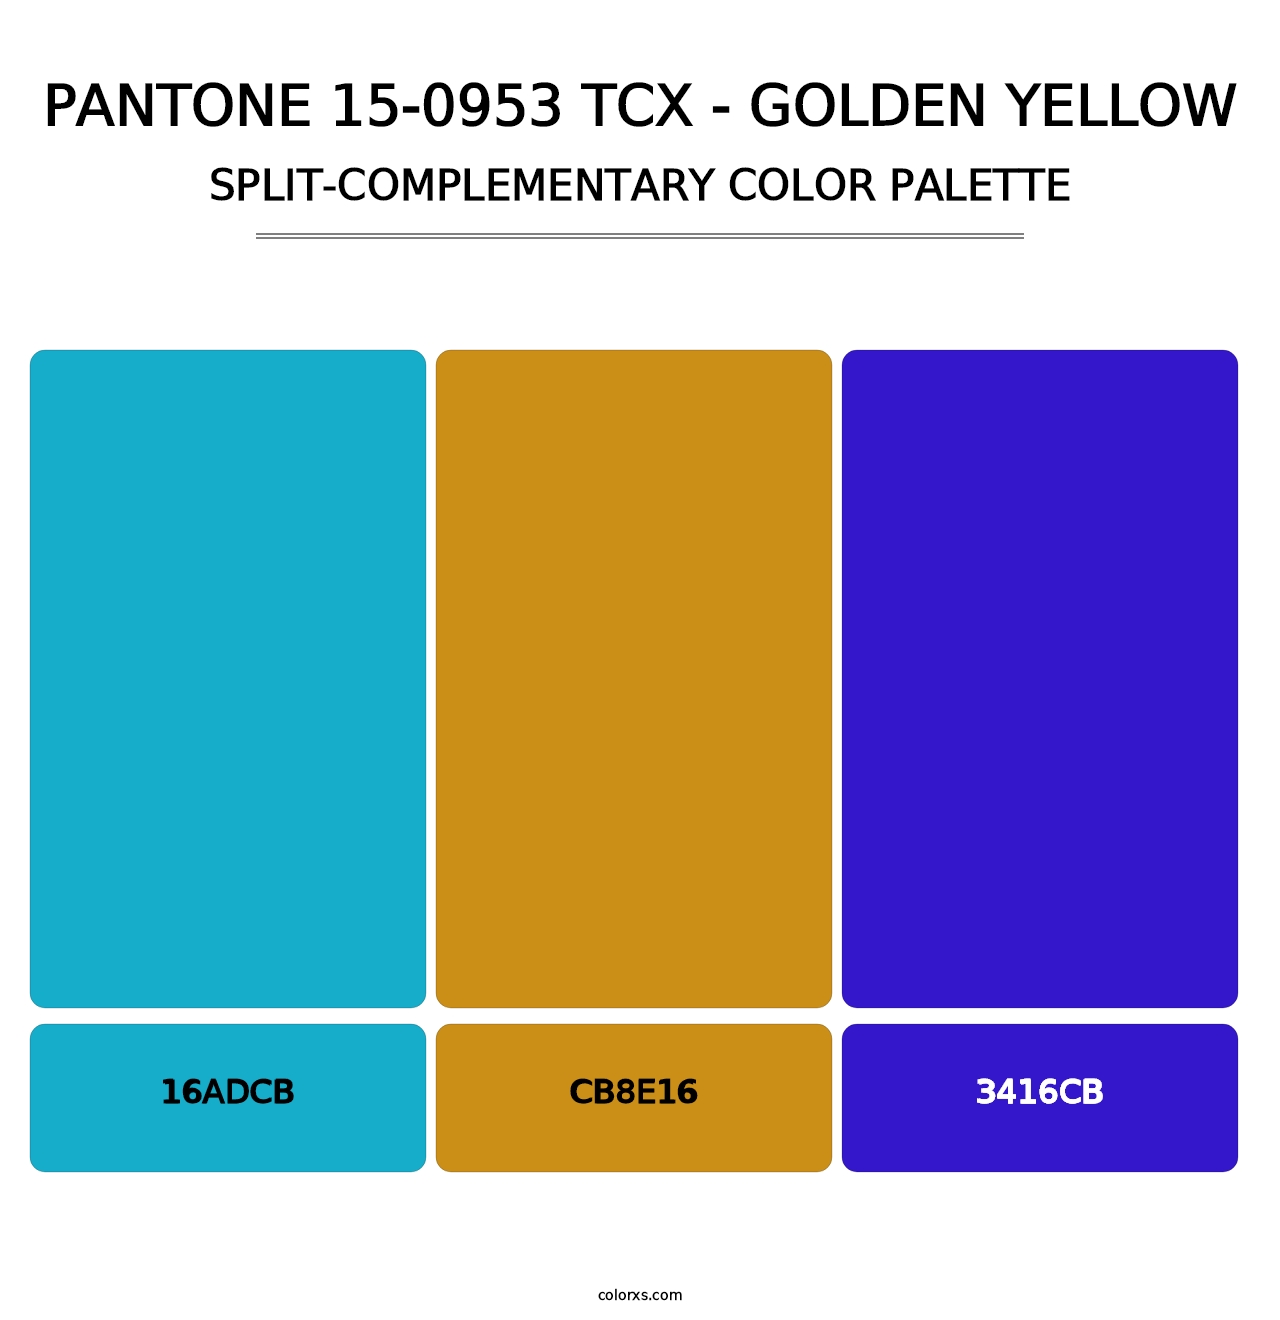 PANTONE 15-0953 TCX - Golden Yellow - Split-Complementary Color Palette